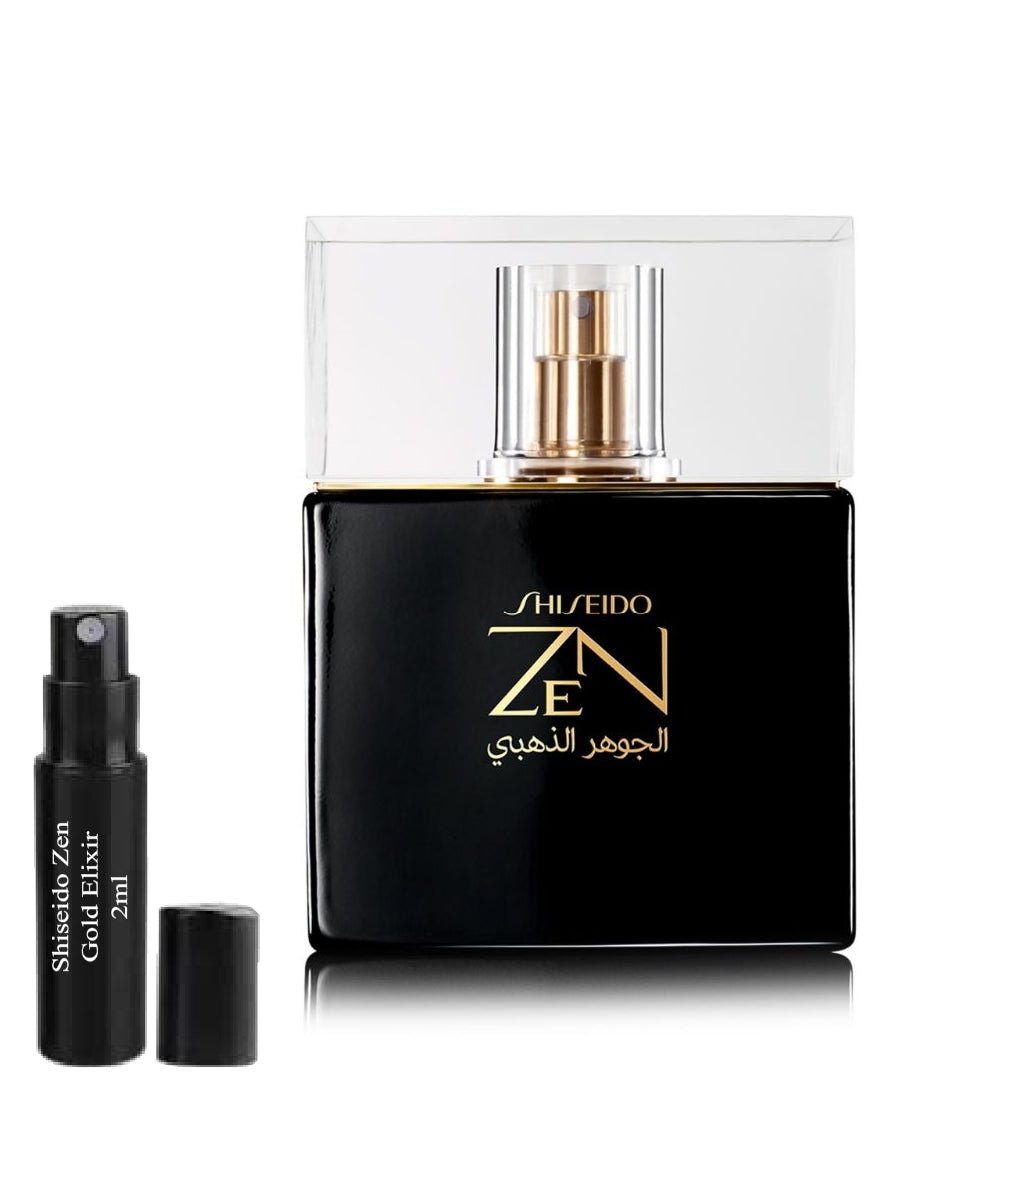 Shiseido Zen Gold Elixir 2ml 0.06 fl. o.z. parfymprov,  Shiseido Zen Gold Elixir 2ml 0.06 fl. o.z. parfumeprøve,  Shiseido Zen Gold Elixir 2ml 0.06 fl. o.z. parfumstalen,  Shiseido Zen Gold Elixir 2ml 0.06 fl. o.z. muestra de perfume